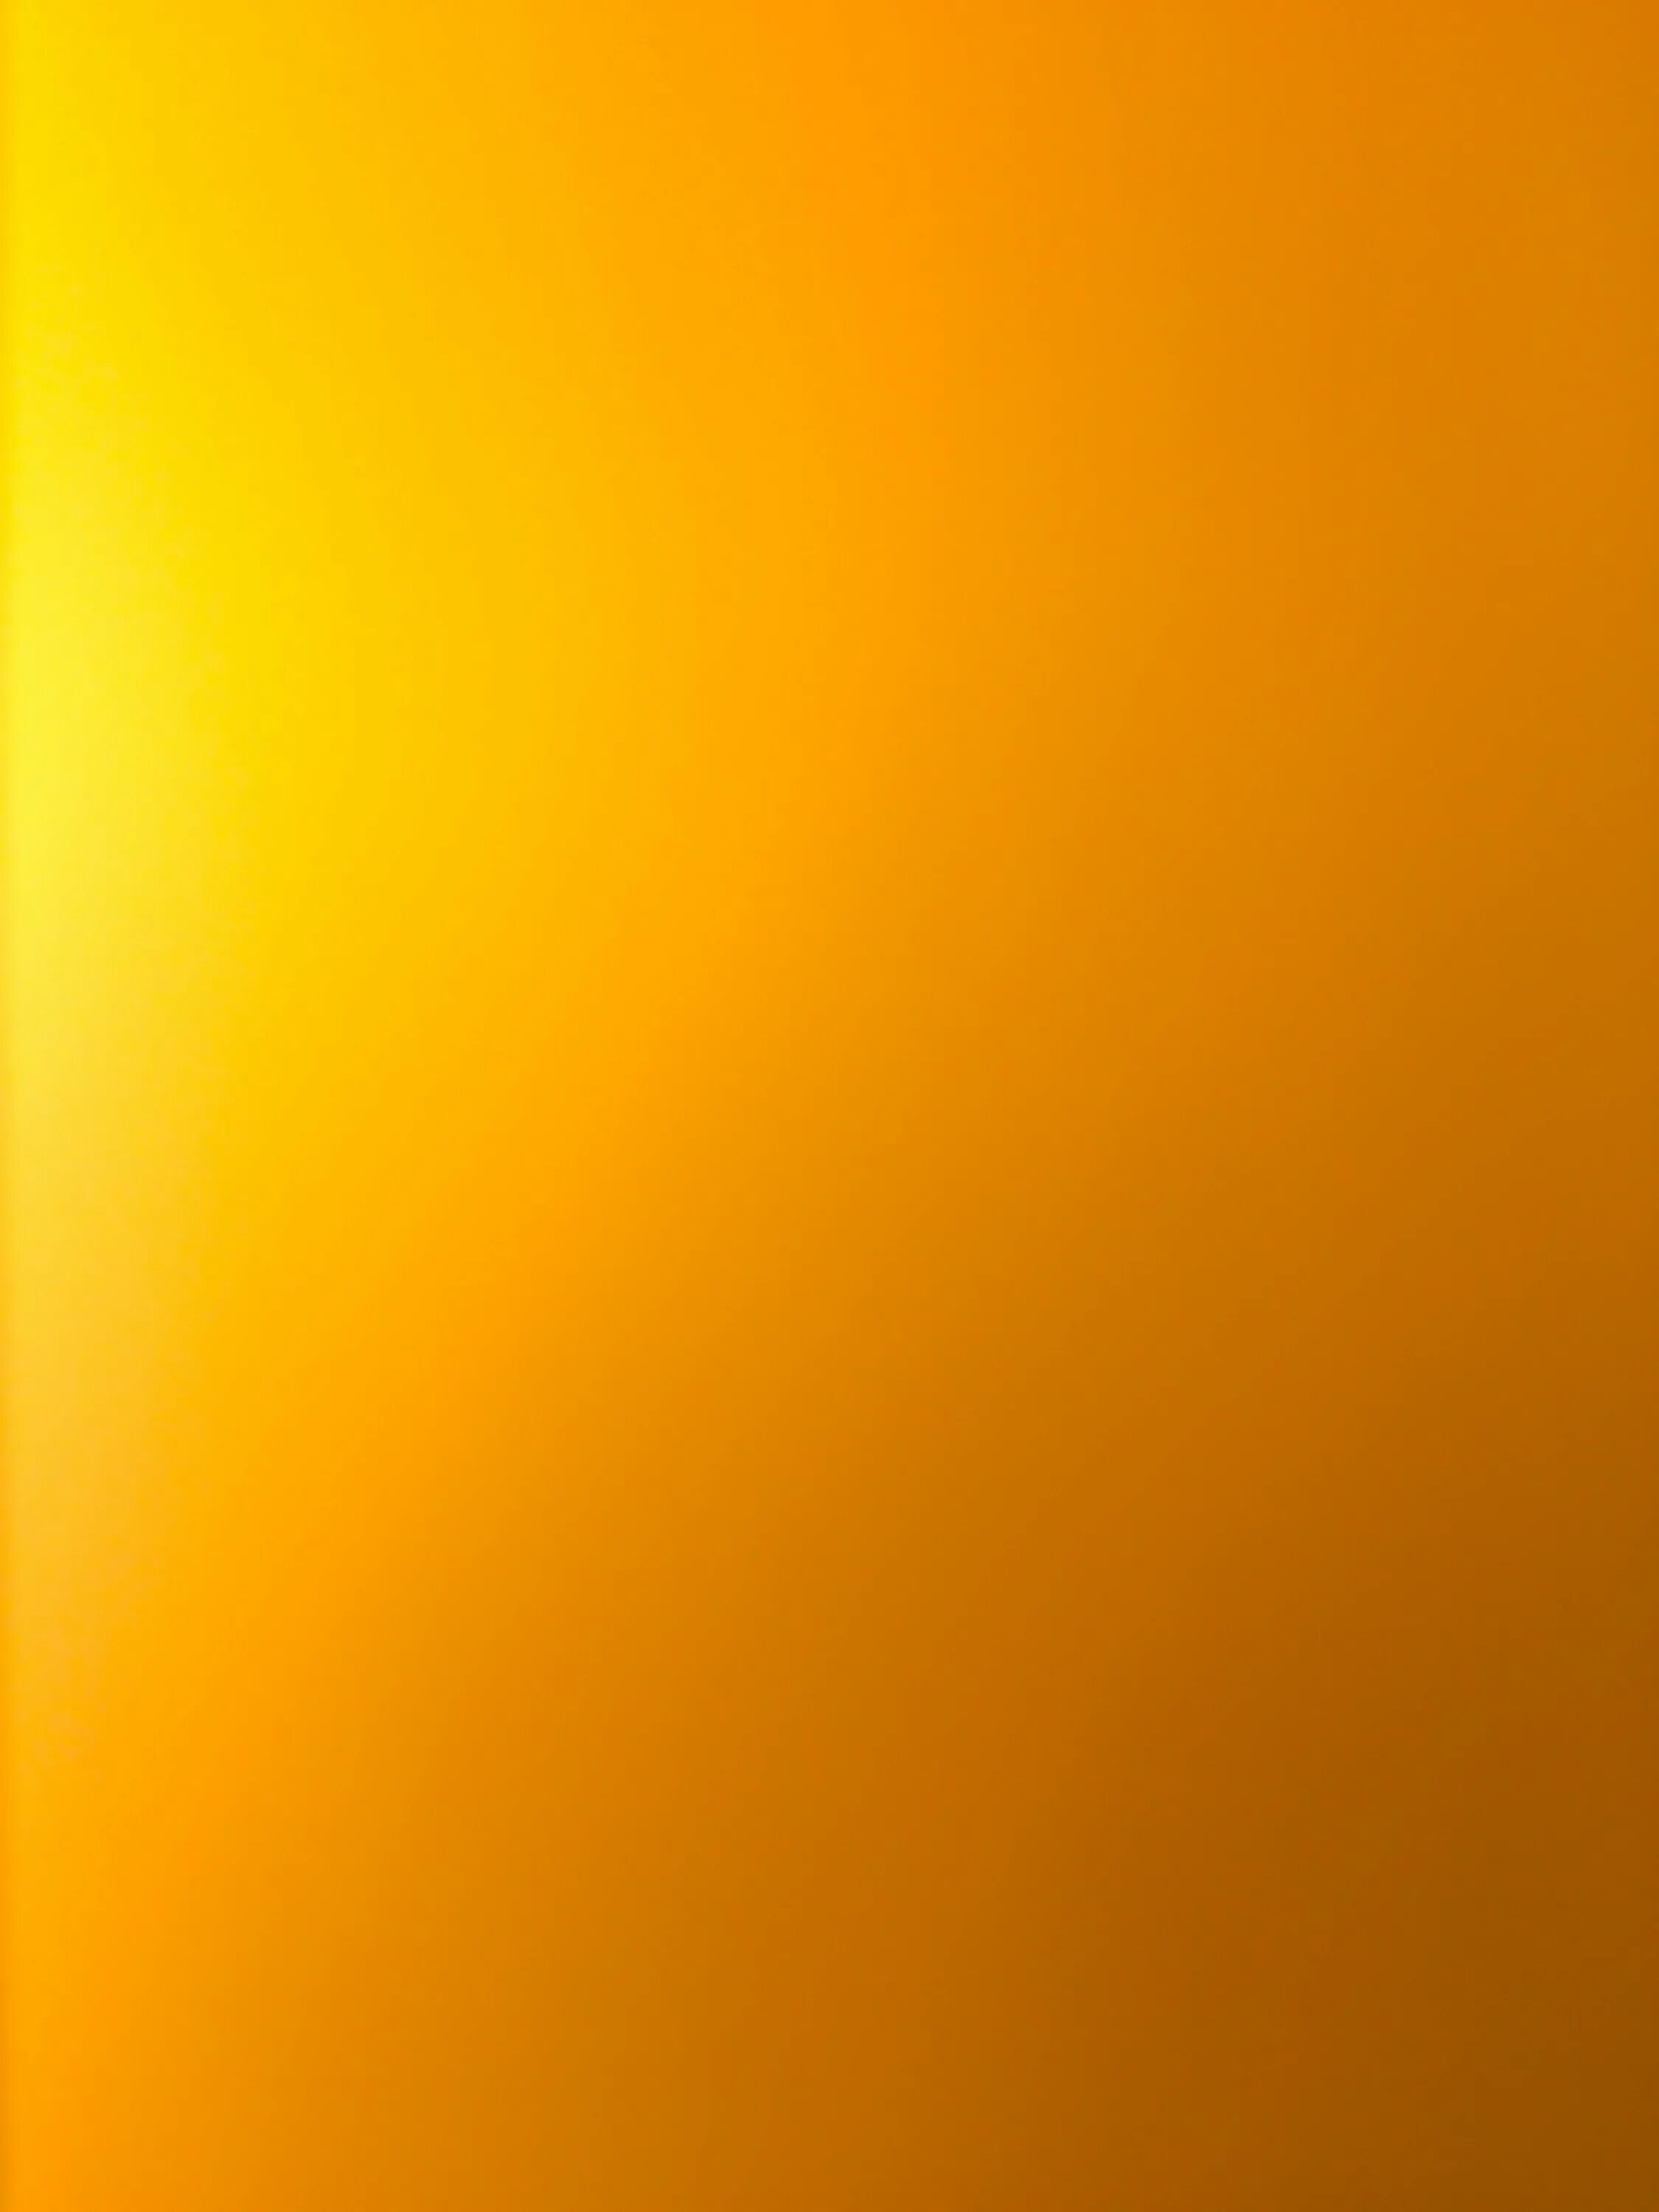 Желтый градиент. Оранжевый градиент. Желто оранжевый градиент. Градиент с желтым цветом. Темный оранжево желтый цвет